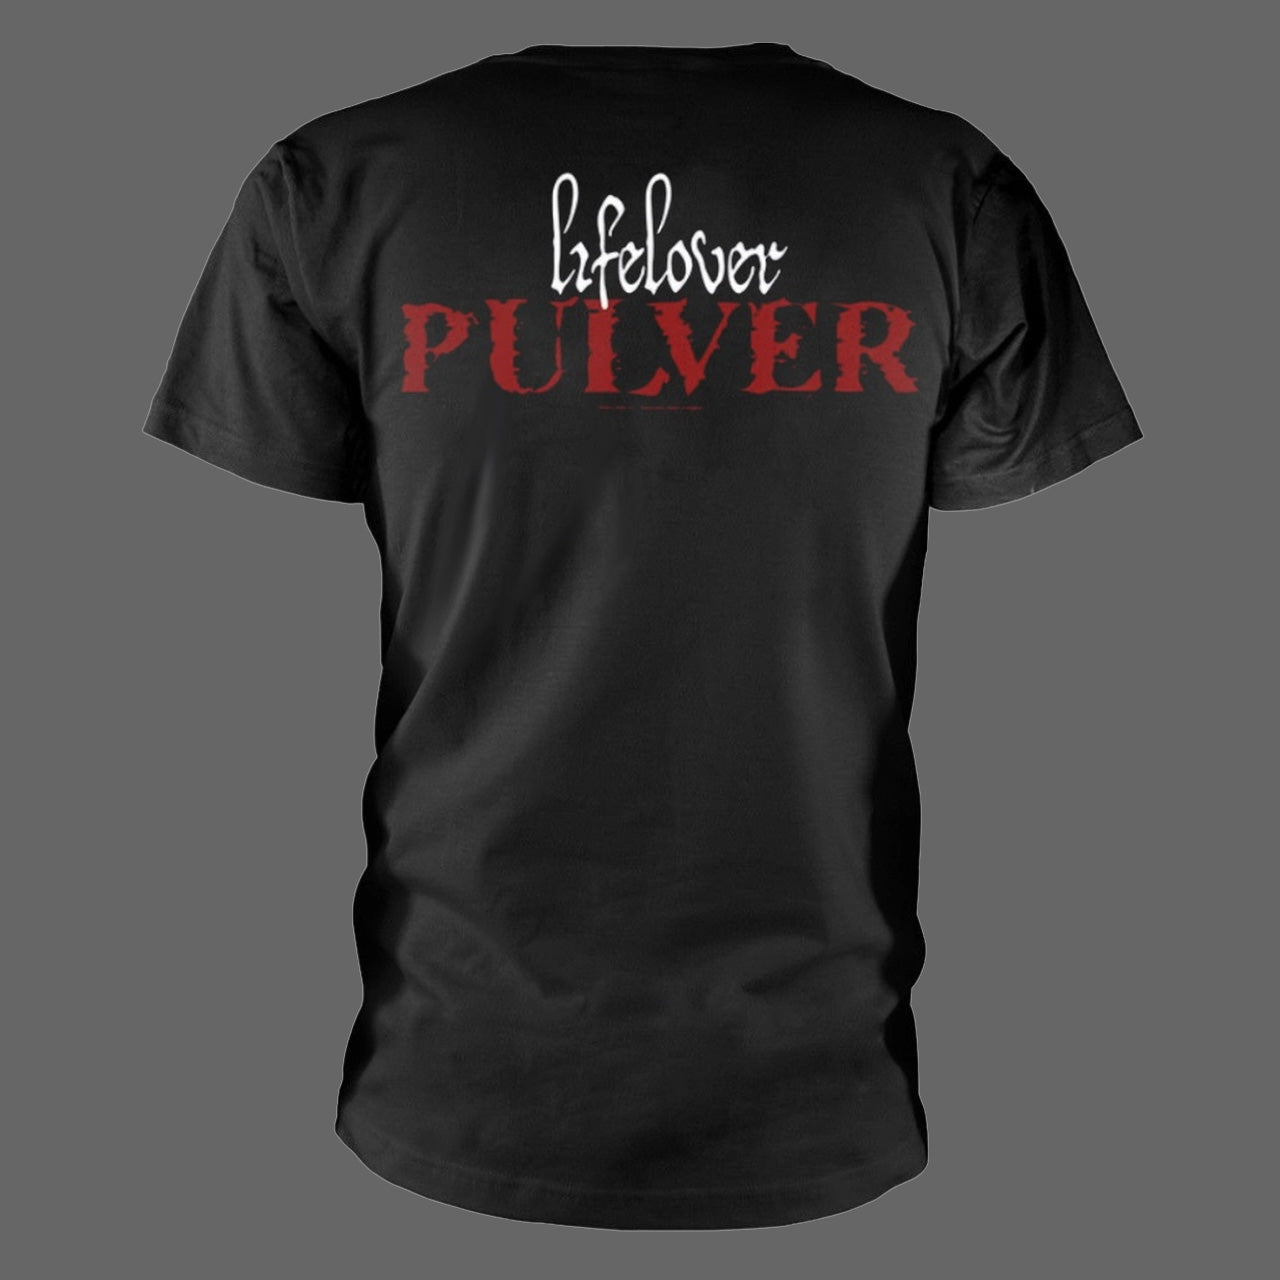 Lifelover - Pulver (T-Shirt)